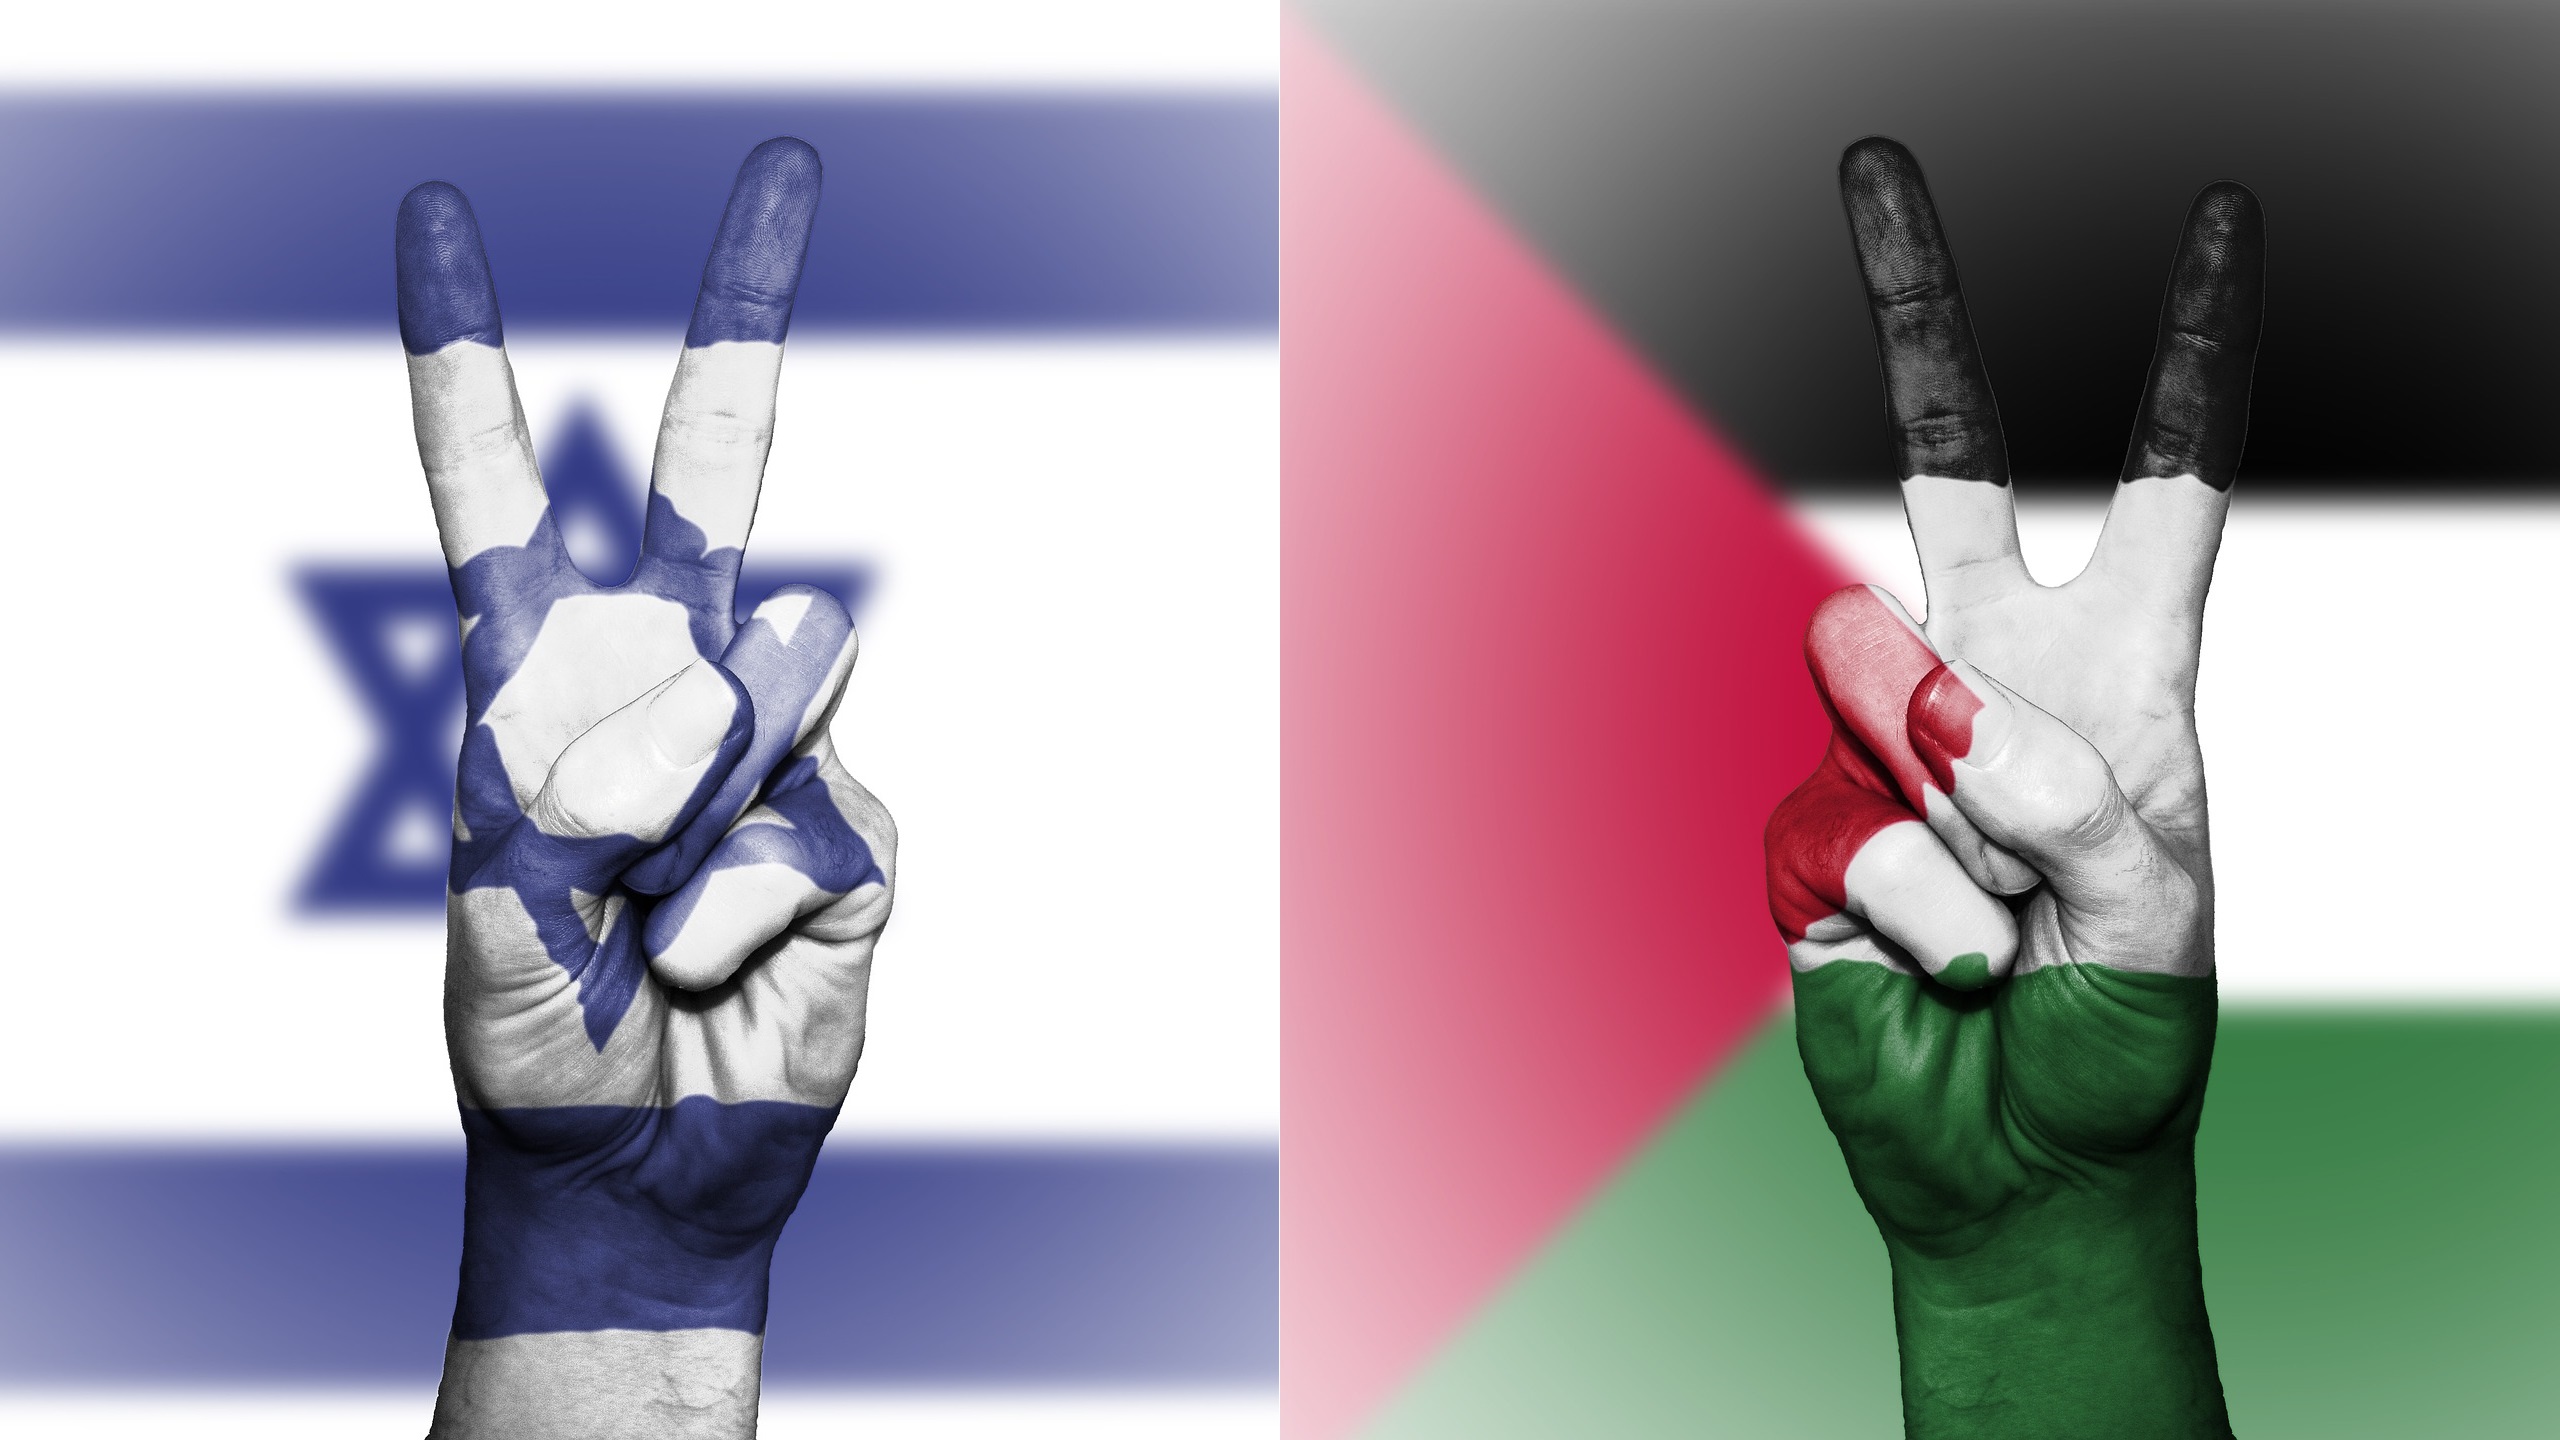 Reassembled Mideast Quartet Urges Caution in Israeli-Palestinian Relations